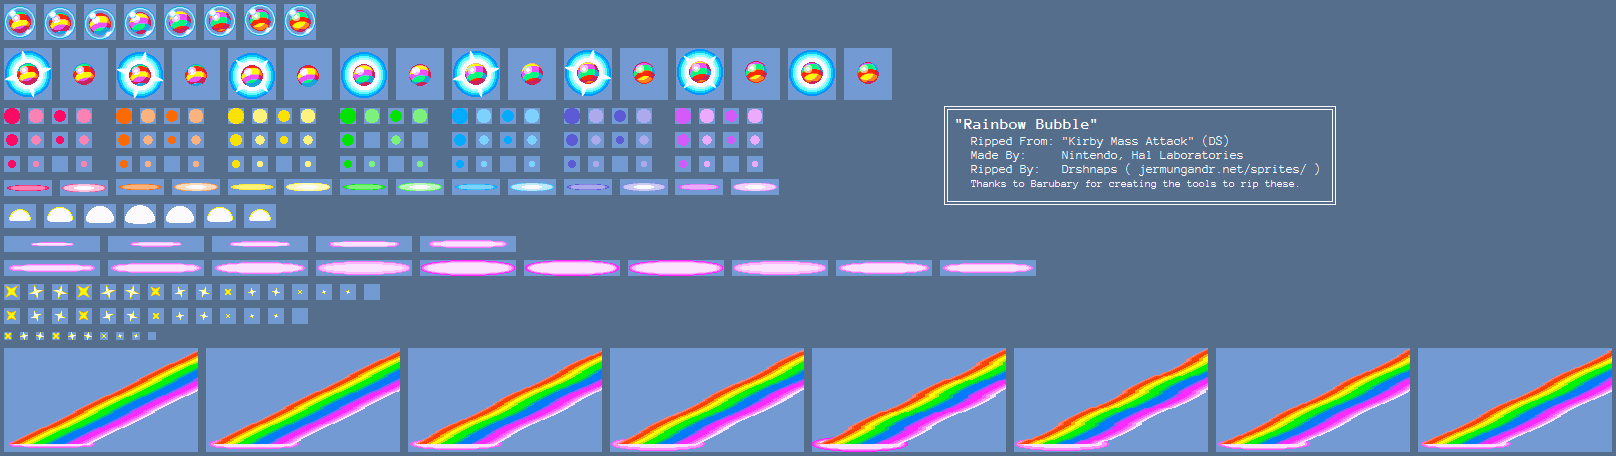 Kirby Mass Attack - Rainbow Bubble